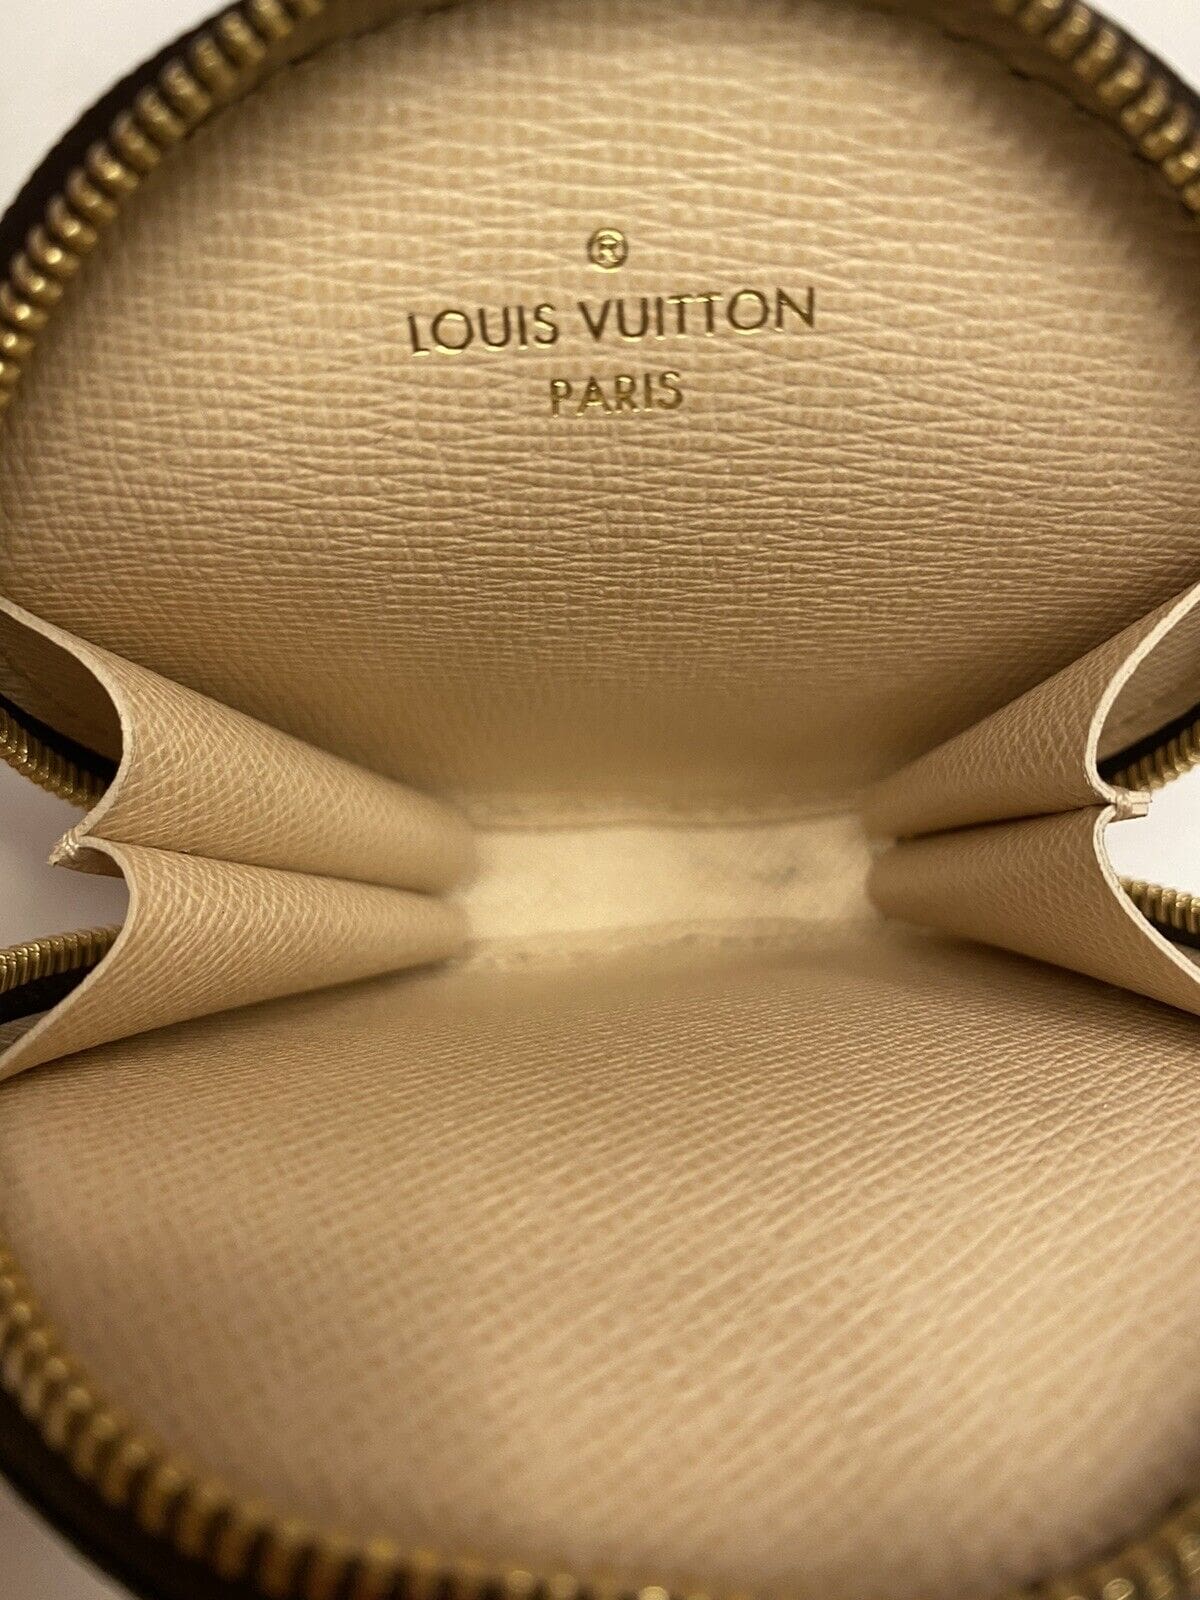 Louis Vuitton Pochette Wristlet Strap in Vachette Natural Calfskin Leather  - SOLD